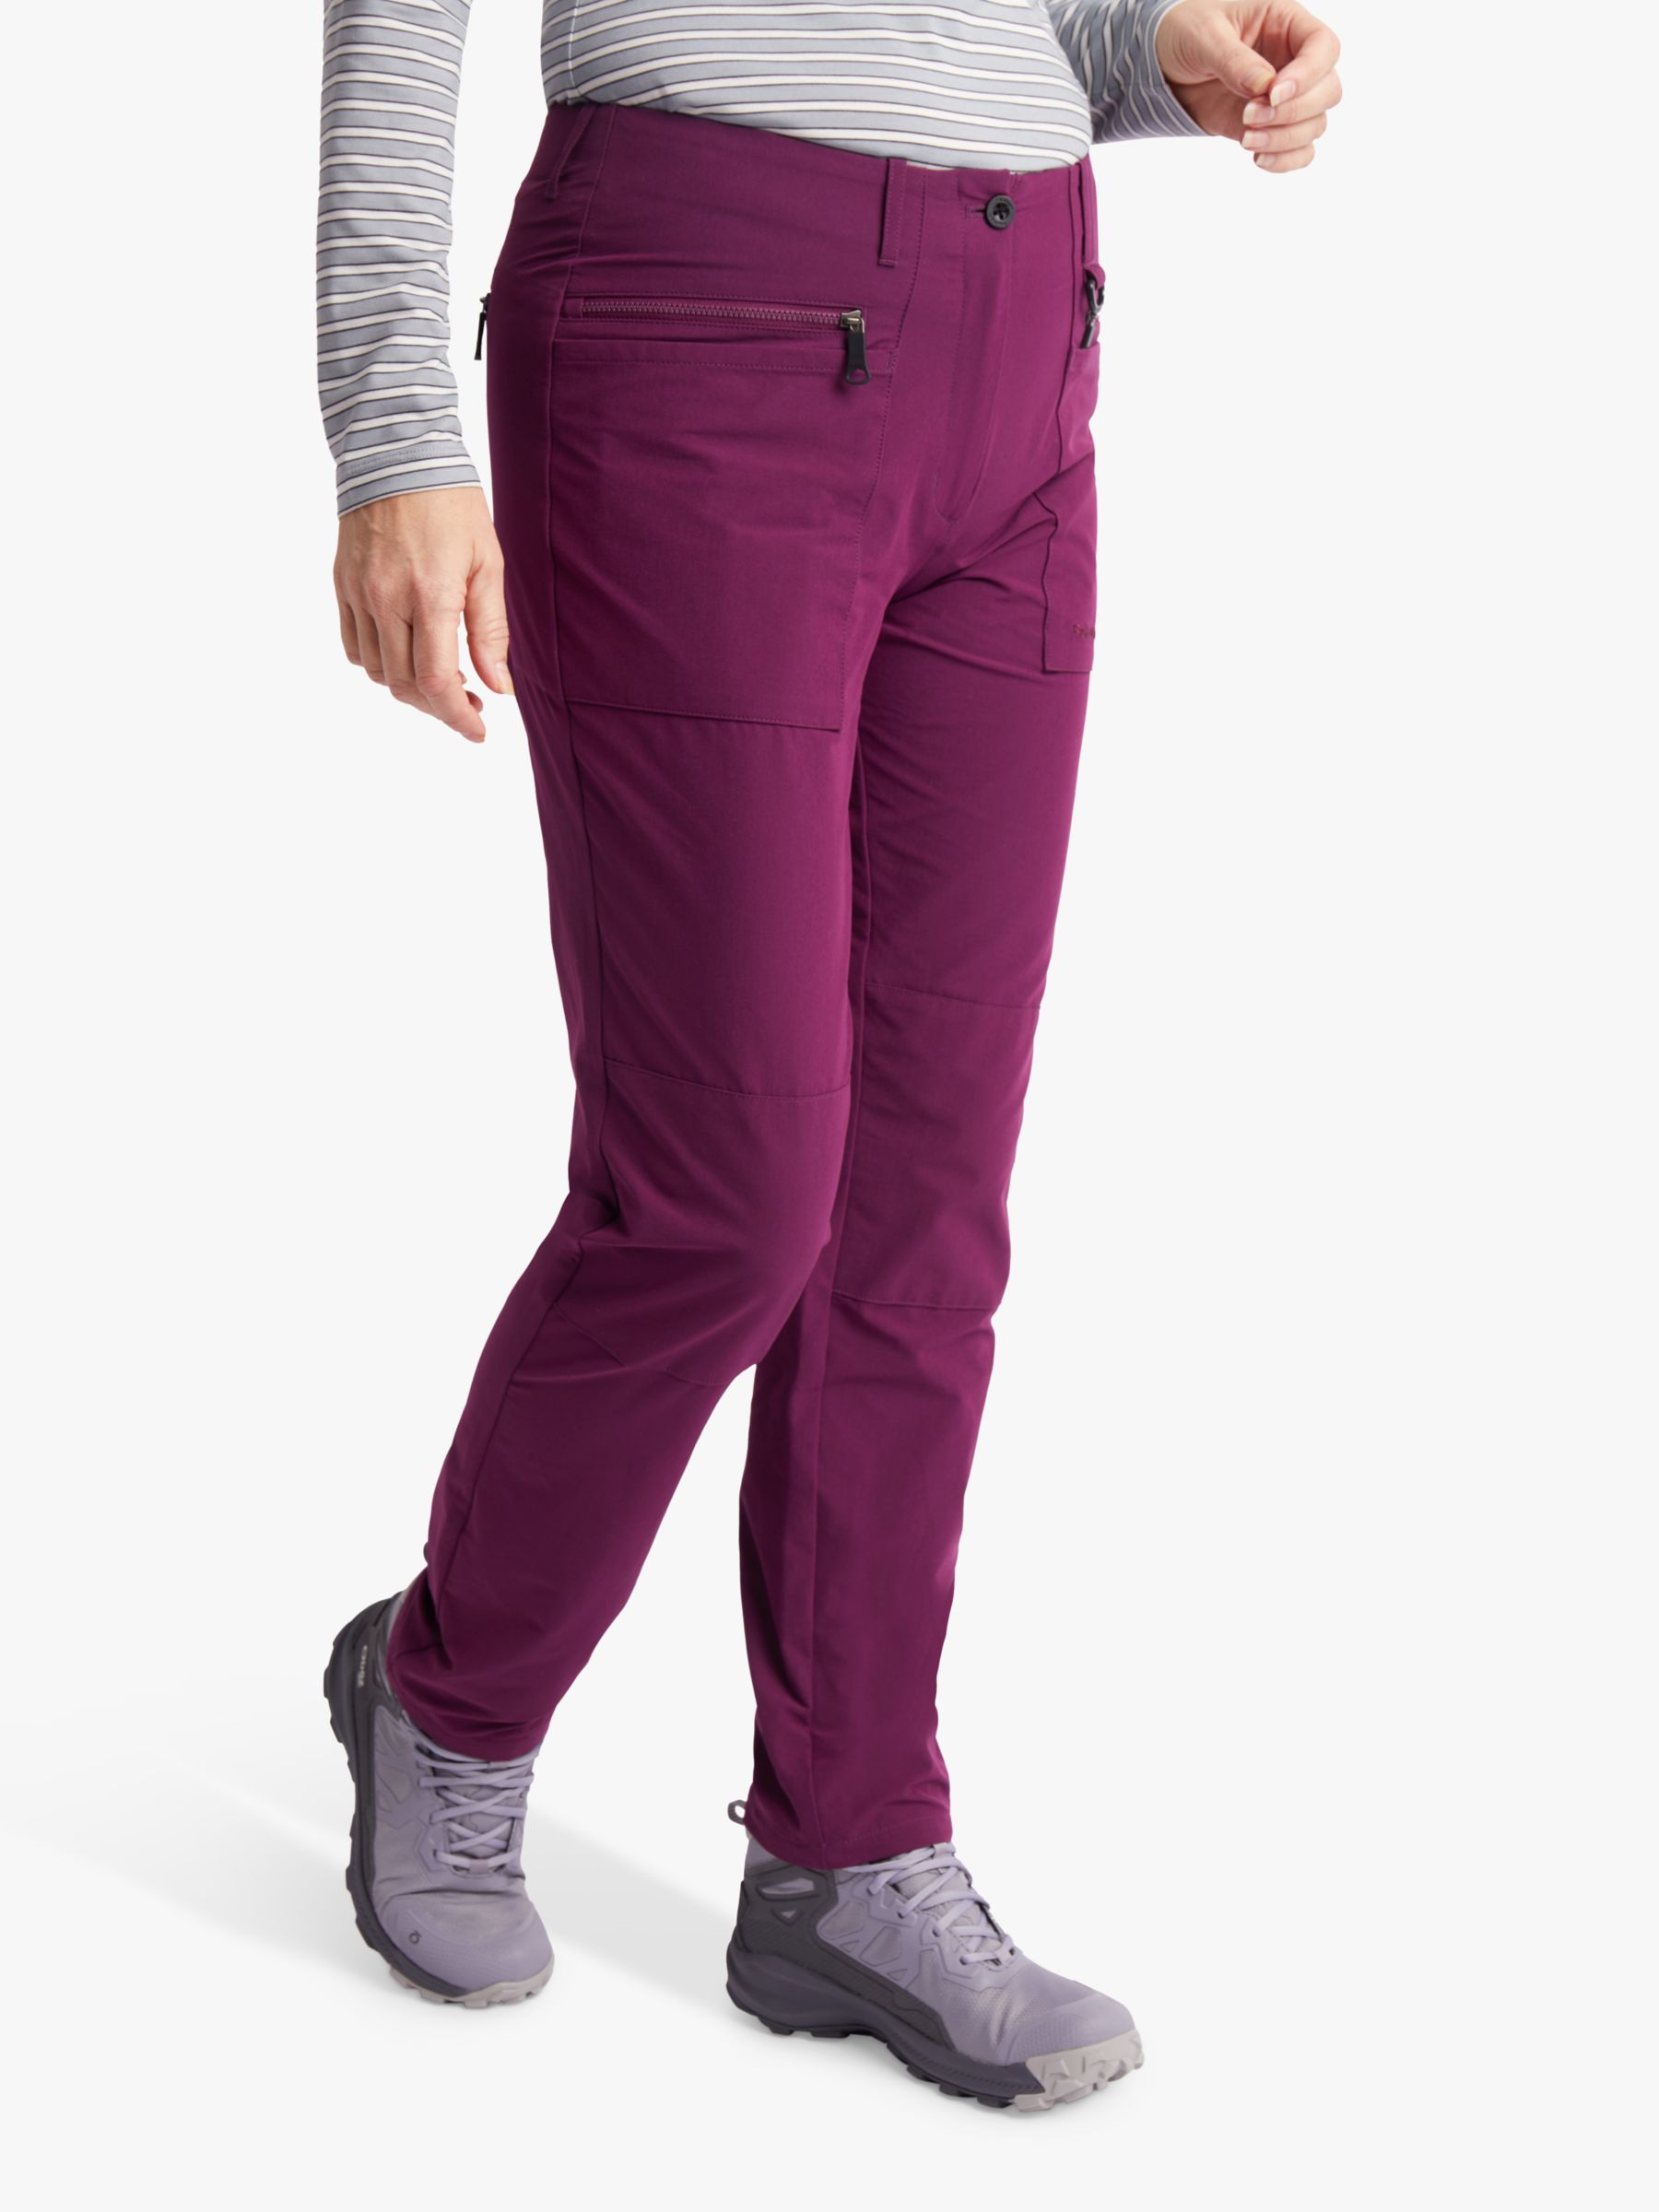 Women Golf Pants Stretch Lightweight Waterproof Pockets Cargo Chino Work  Trouser